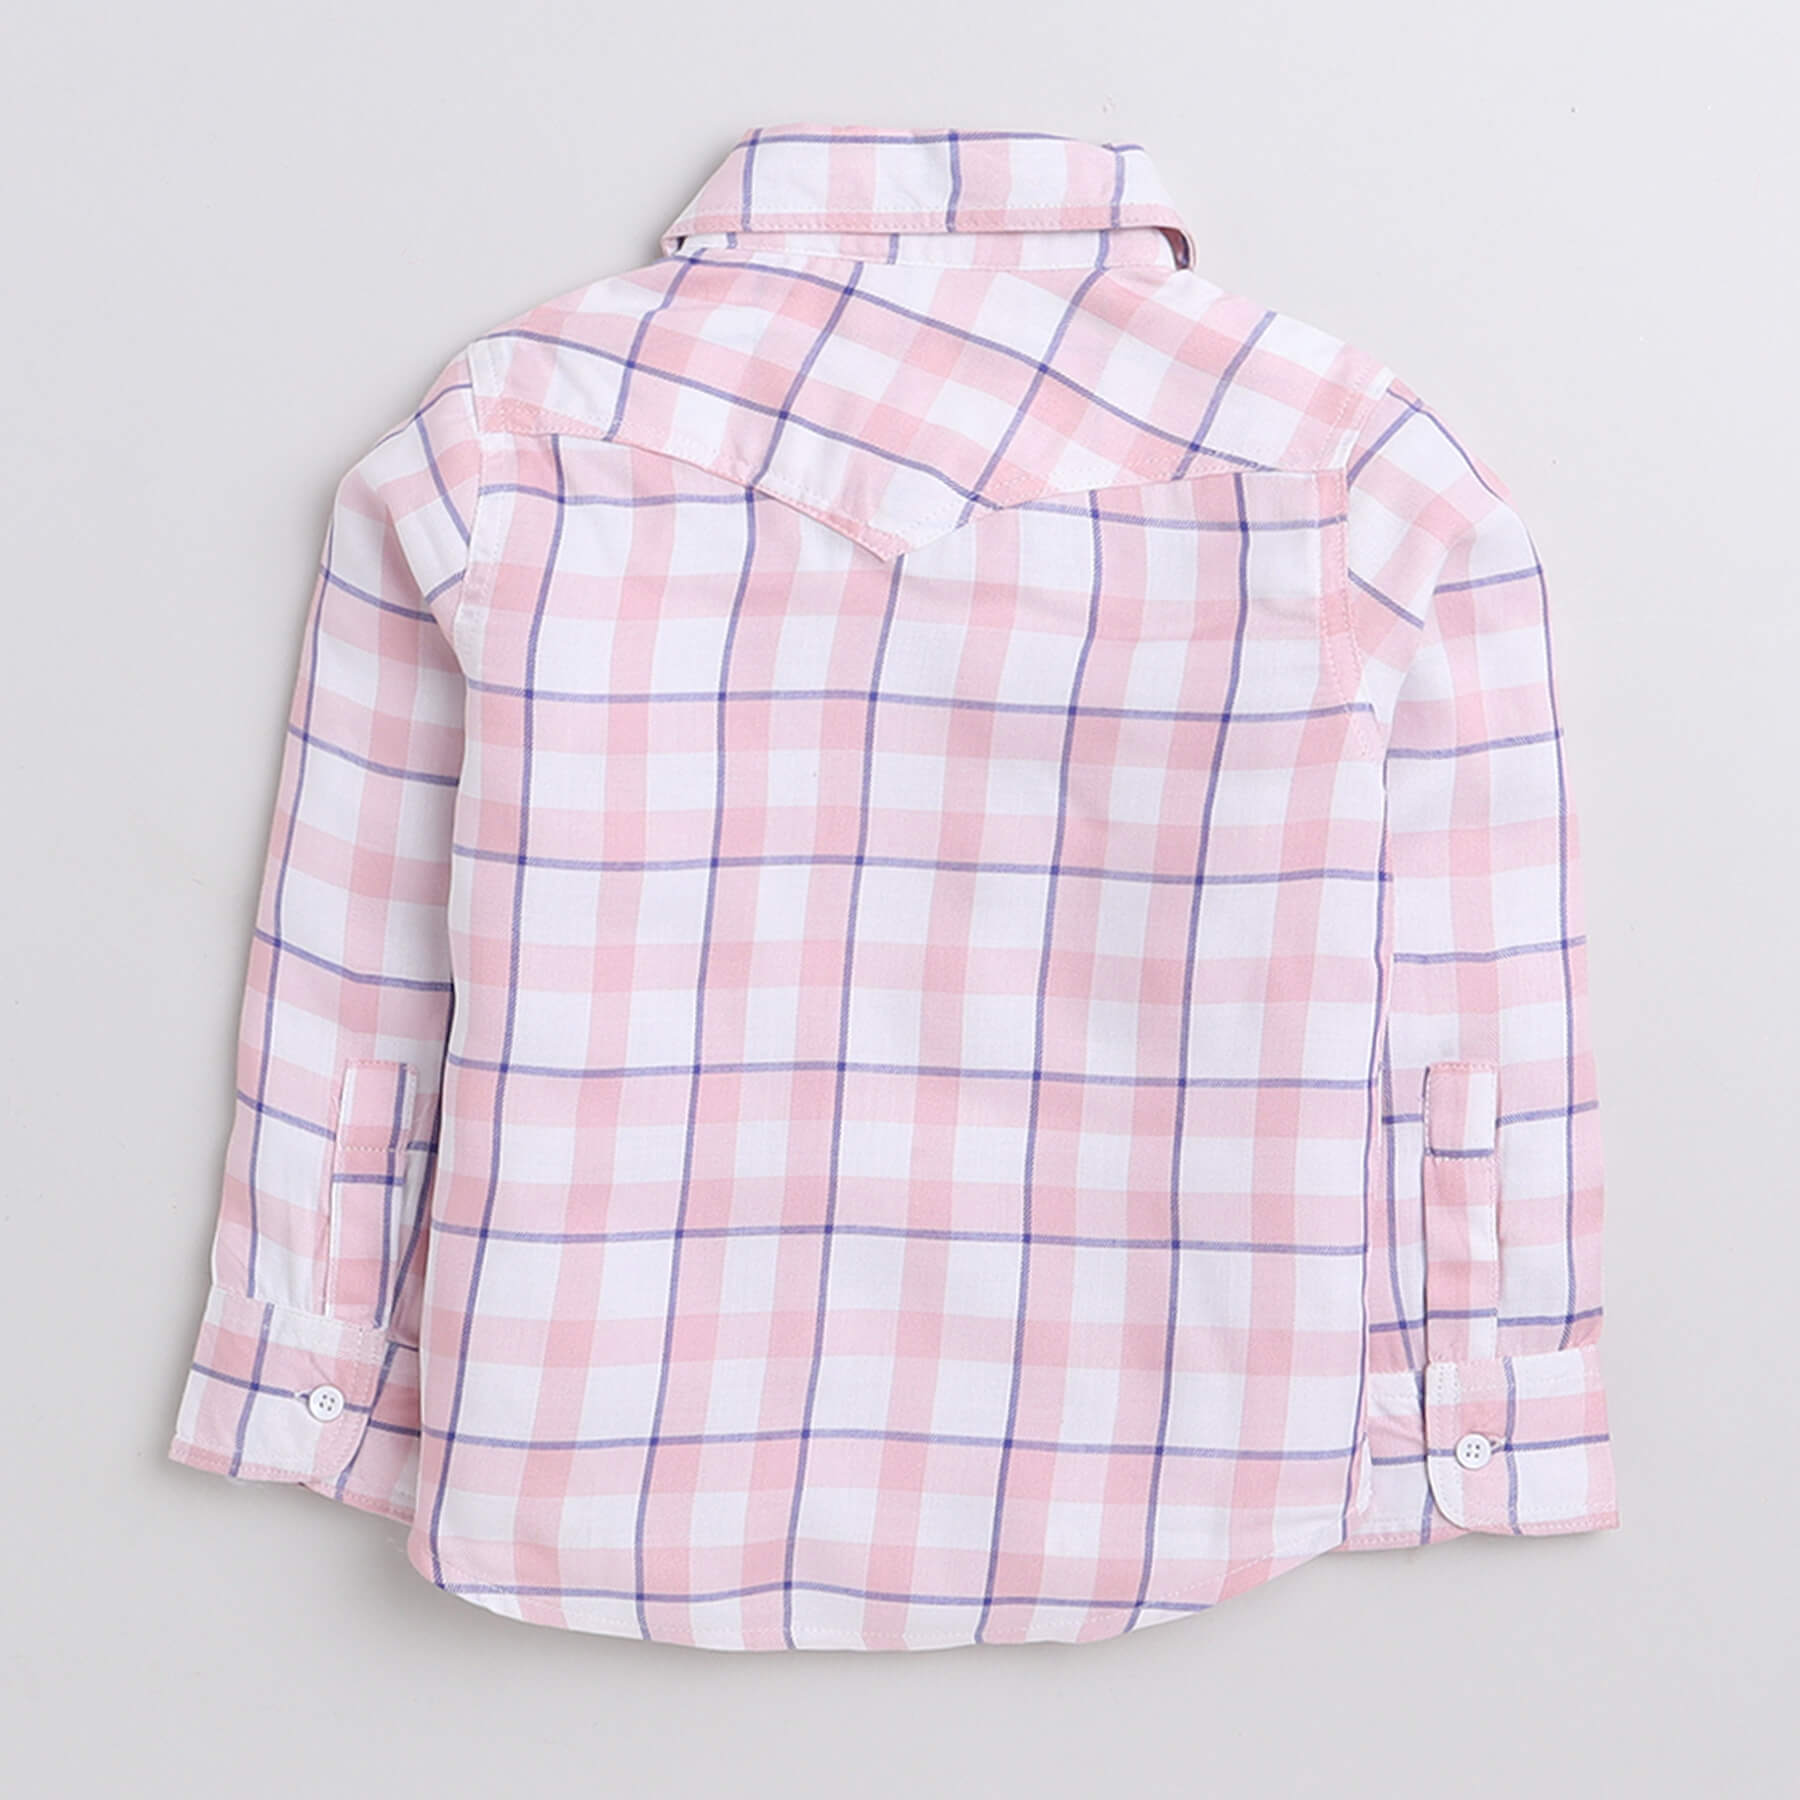 Taffykids checks full sleeves shirt - Pink/White